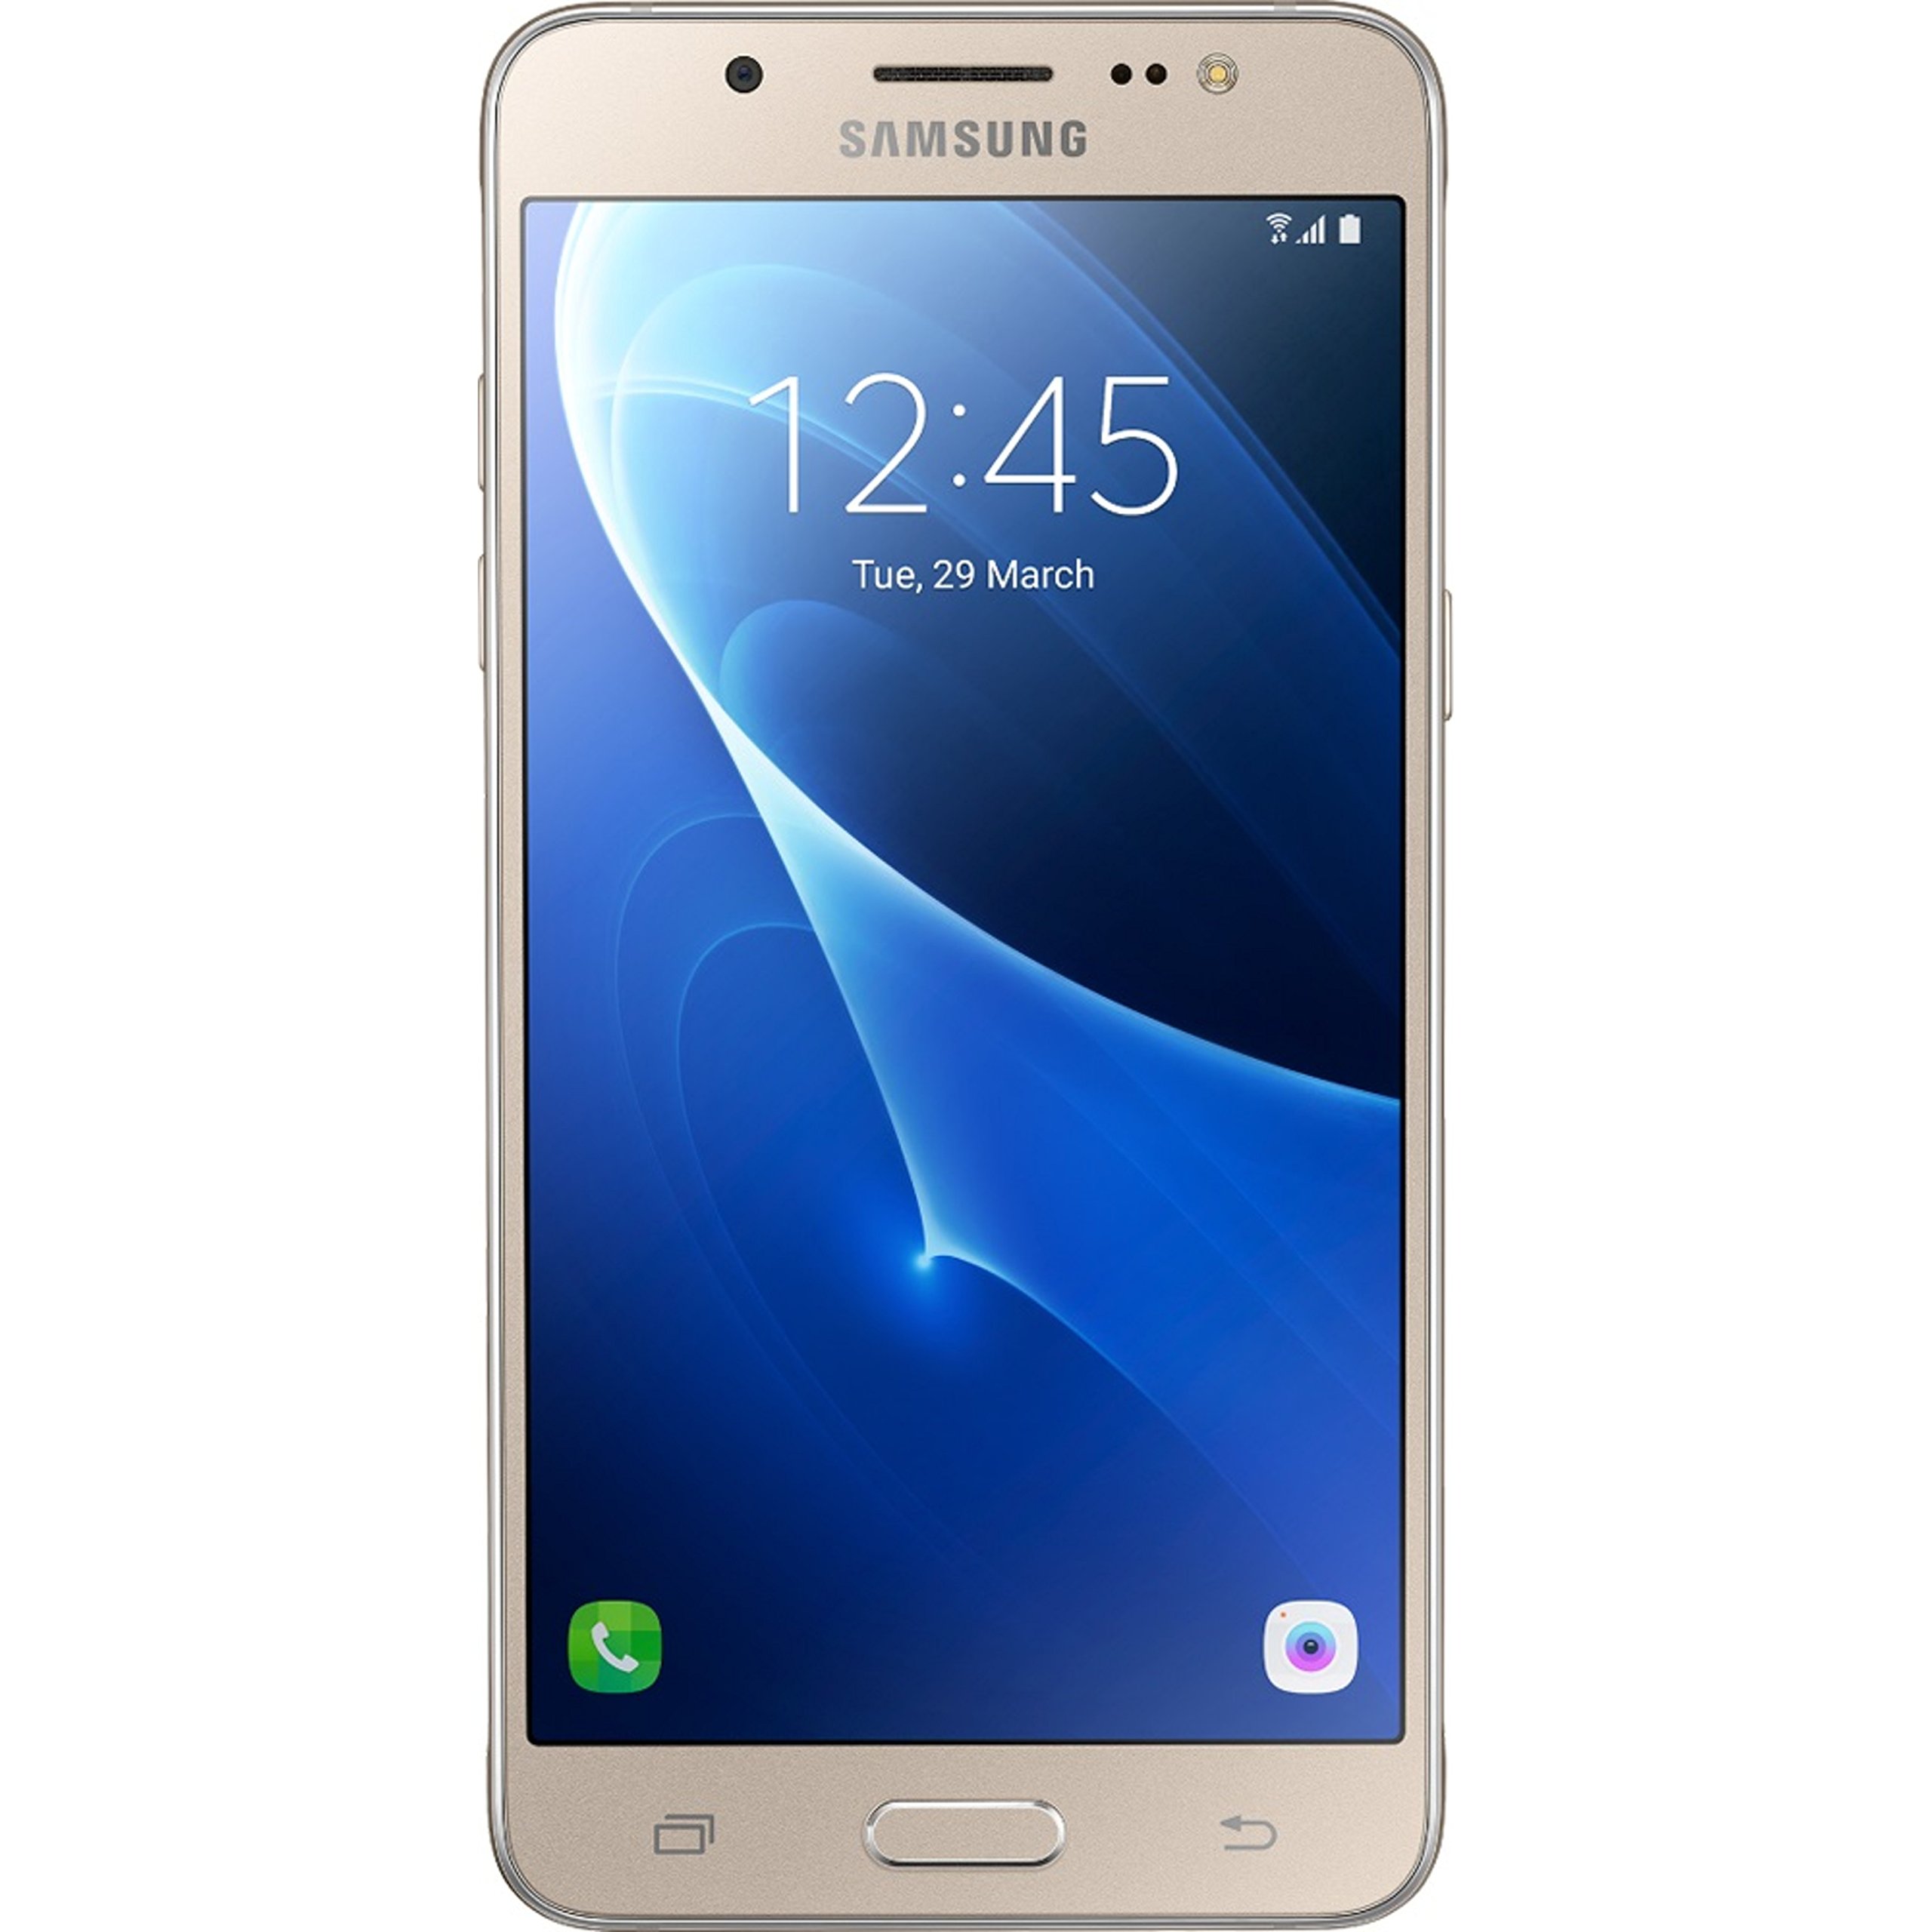 Samsung SM-J510M Galaxy J5 J510M/DS 16GB Gold, 5.2", Dual Sim, Factory Unlocked Phone, No Warranty - International Version